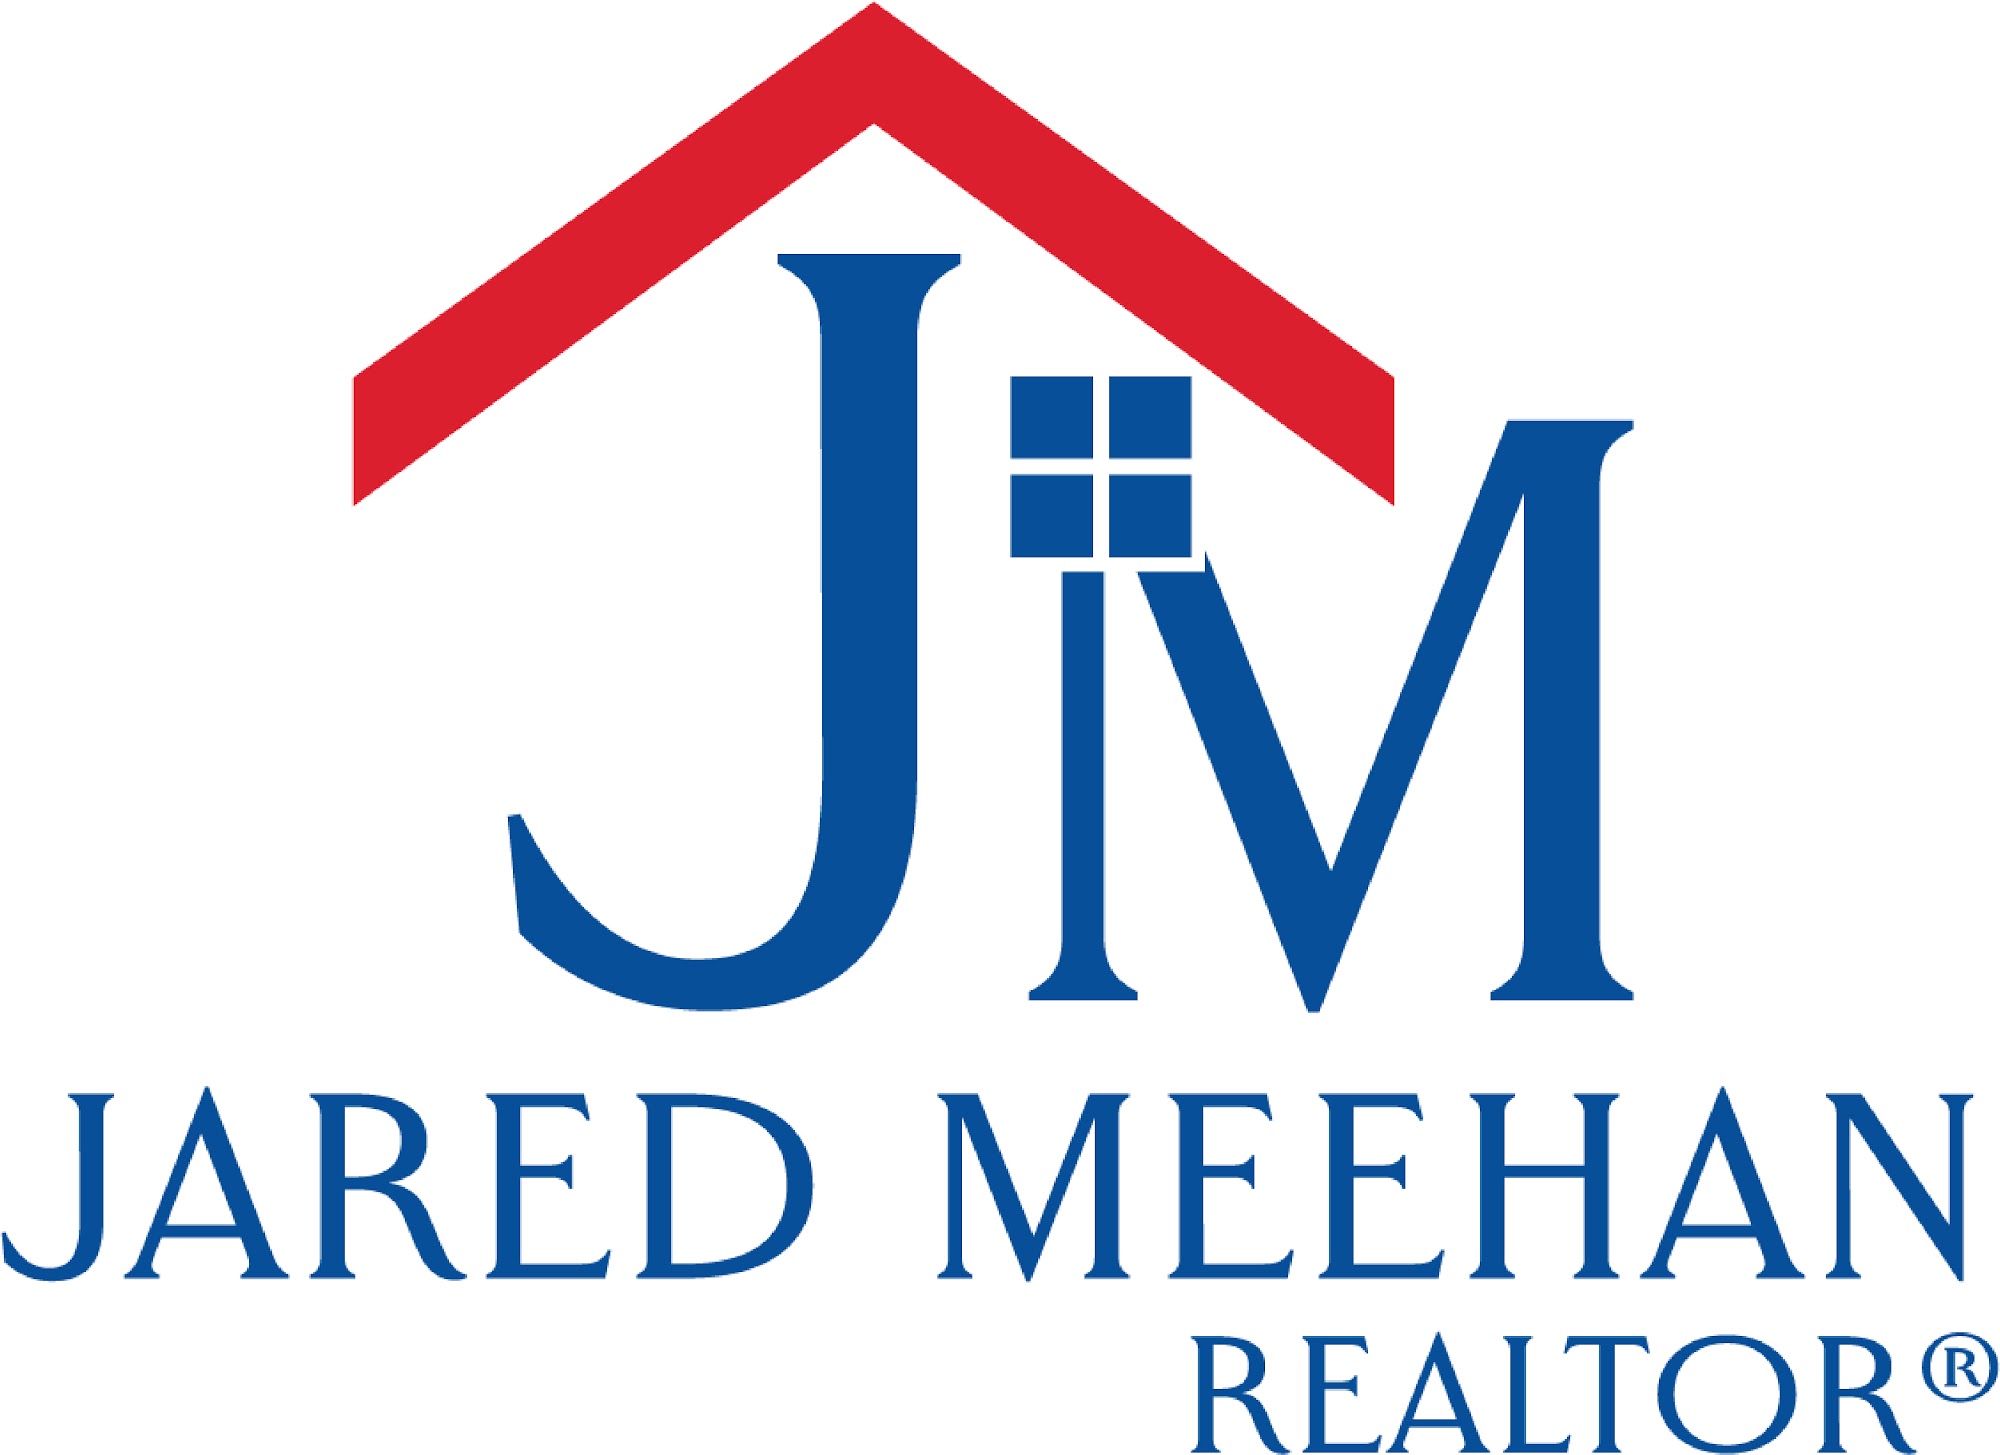 Jared Meehan Real Estate Advisor 610 Hartford Pike, Killingly Connecticut 06241